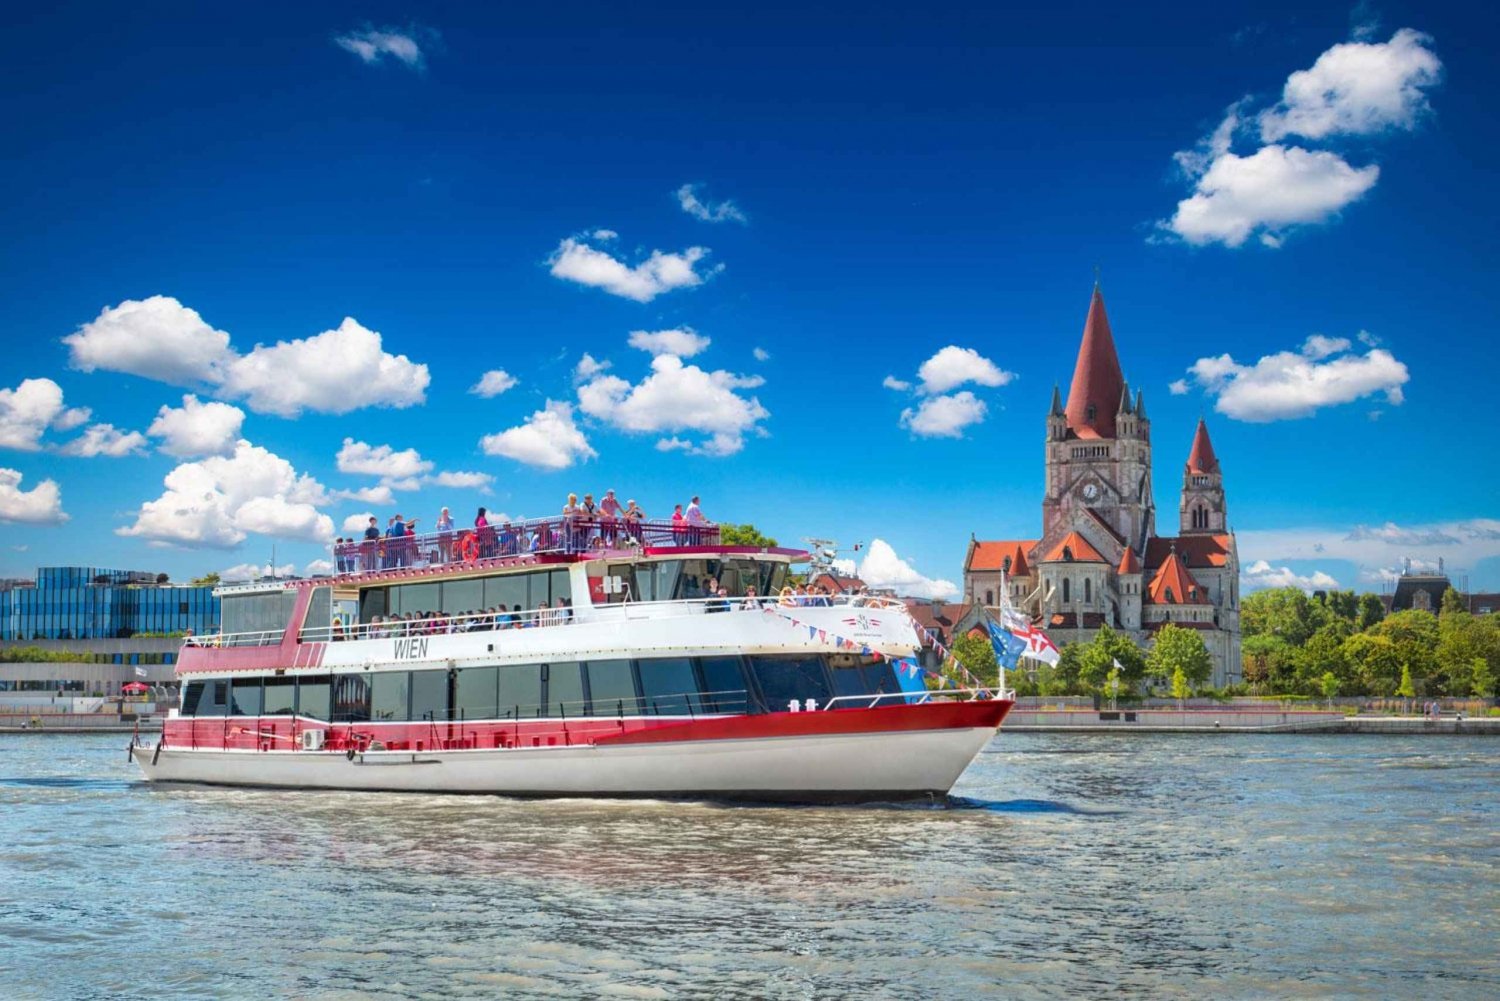 Viena: tour en barco turístico con almuerzo